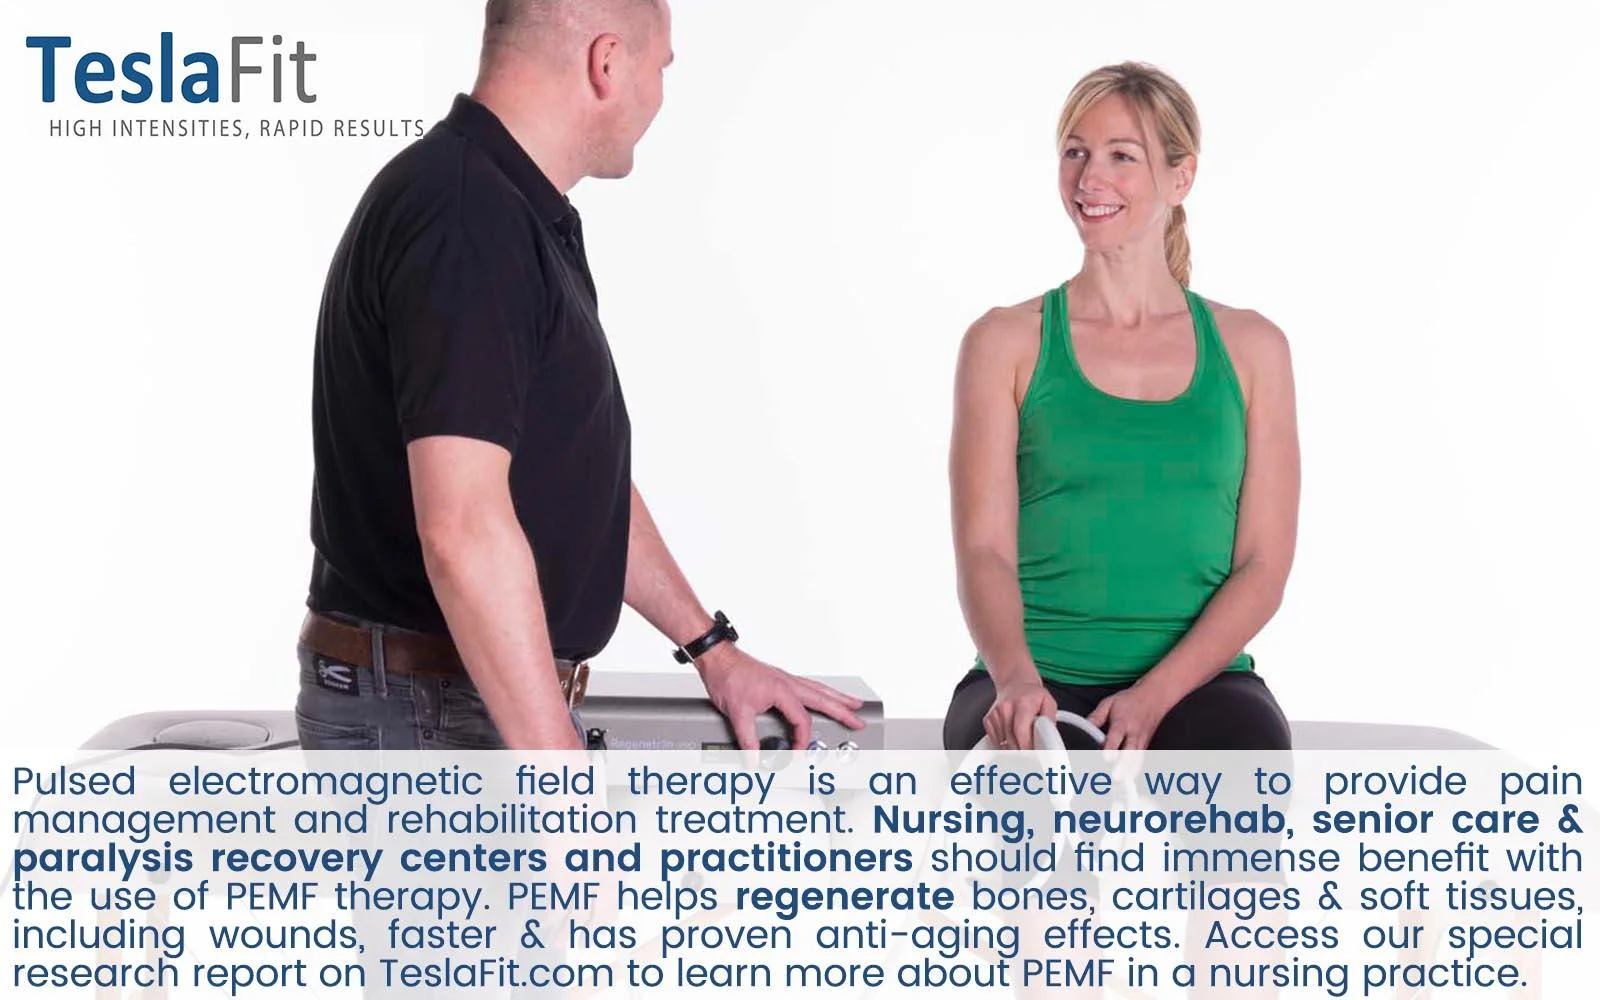 What Is PEMF Therapy? – TeslaFit PEMF